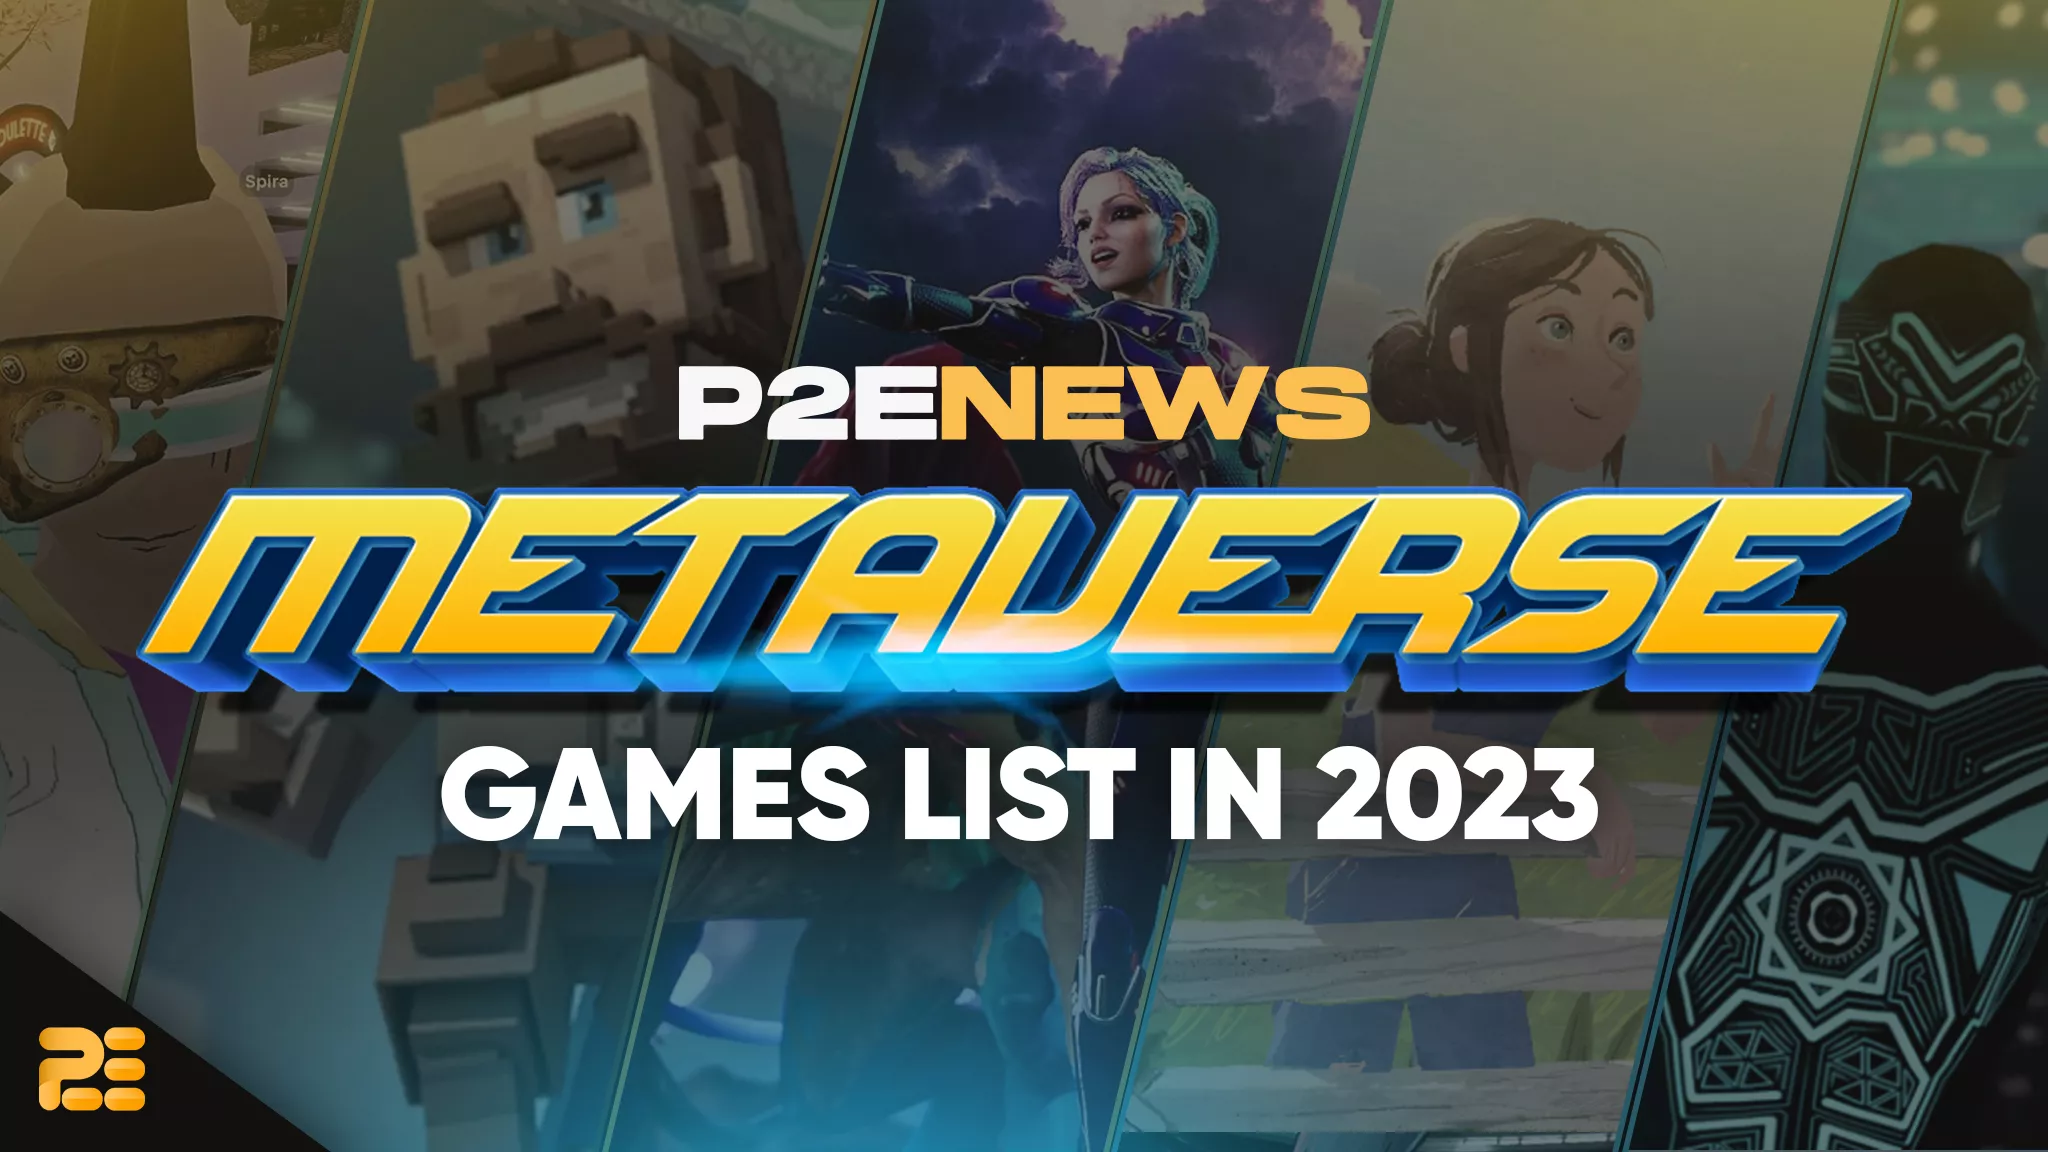 Metaverse Games List 2023